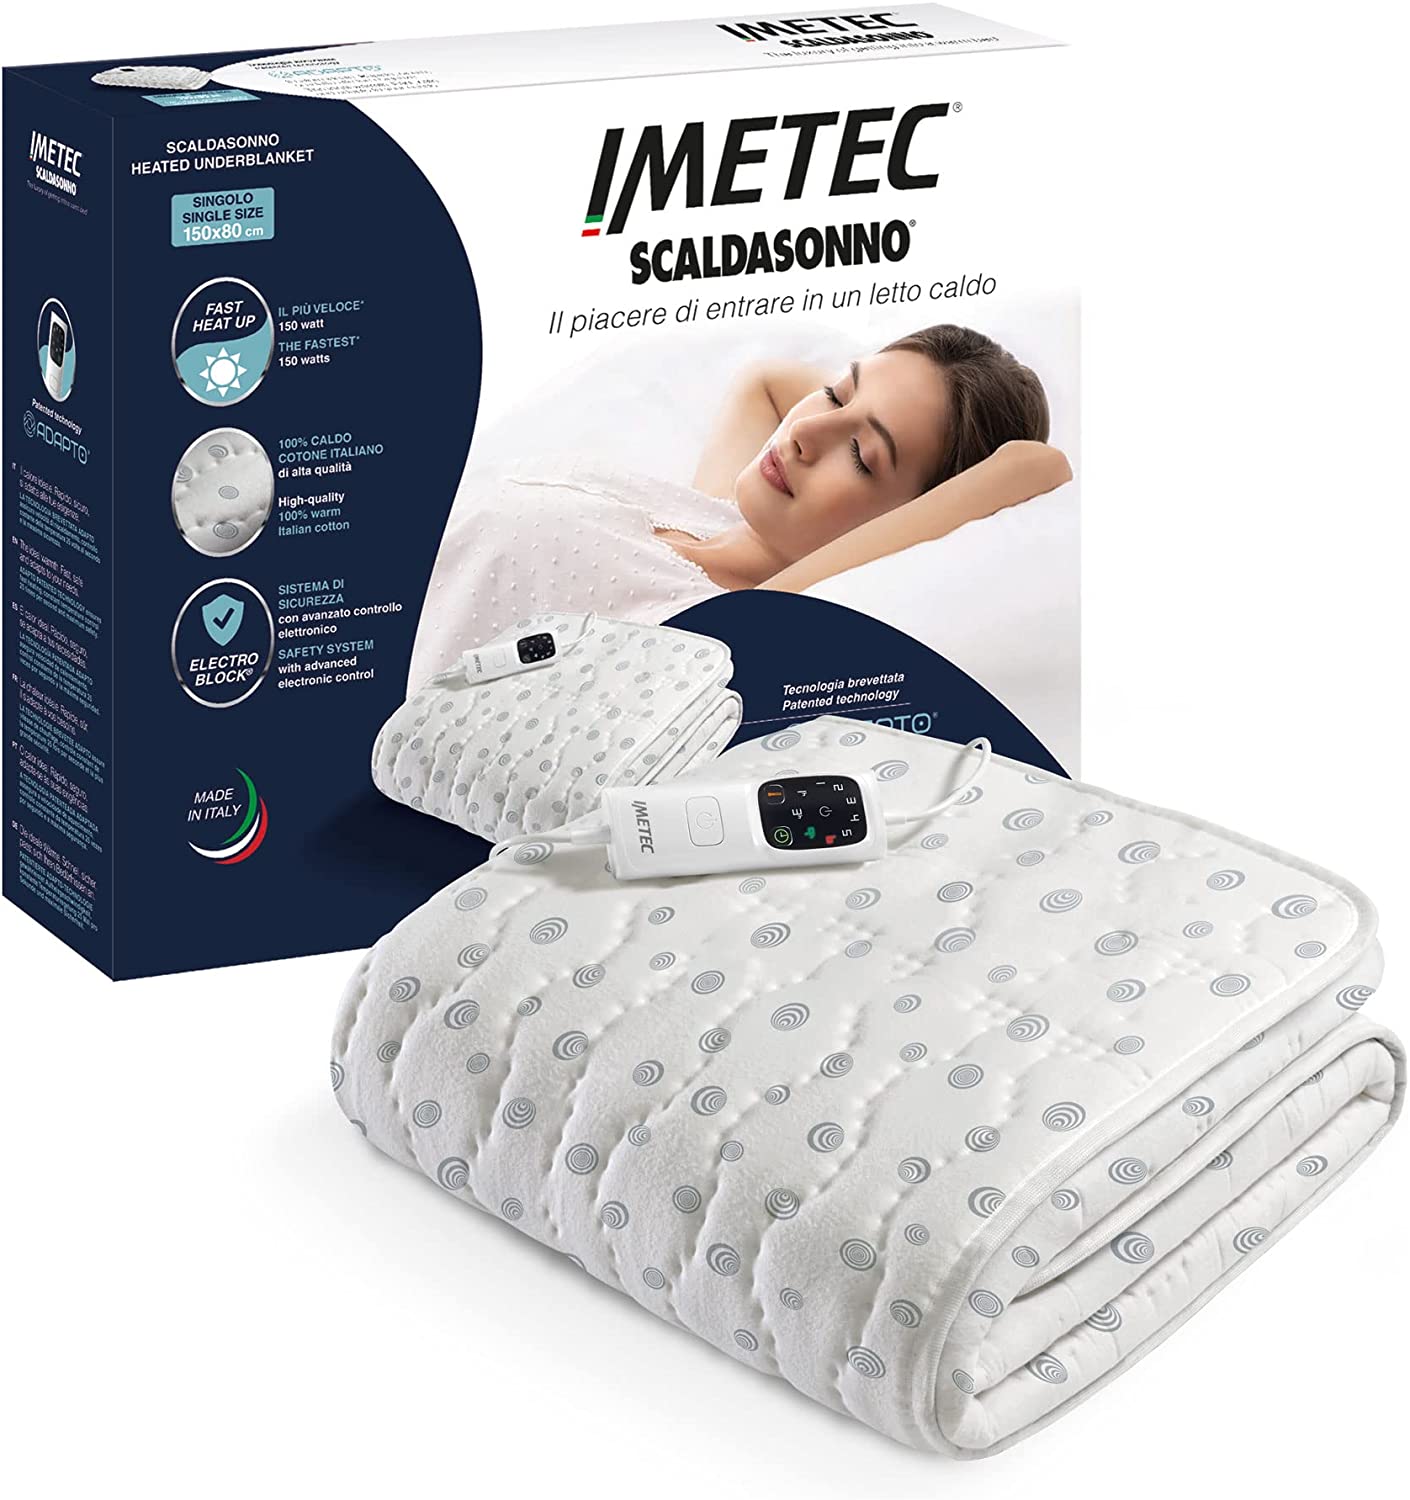 Cuscino termico per cervicale Imetec in offerta: IMPERDIBILE